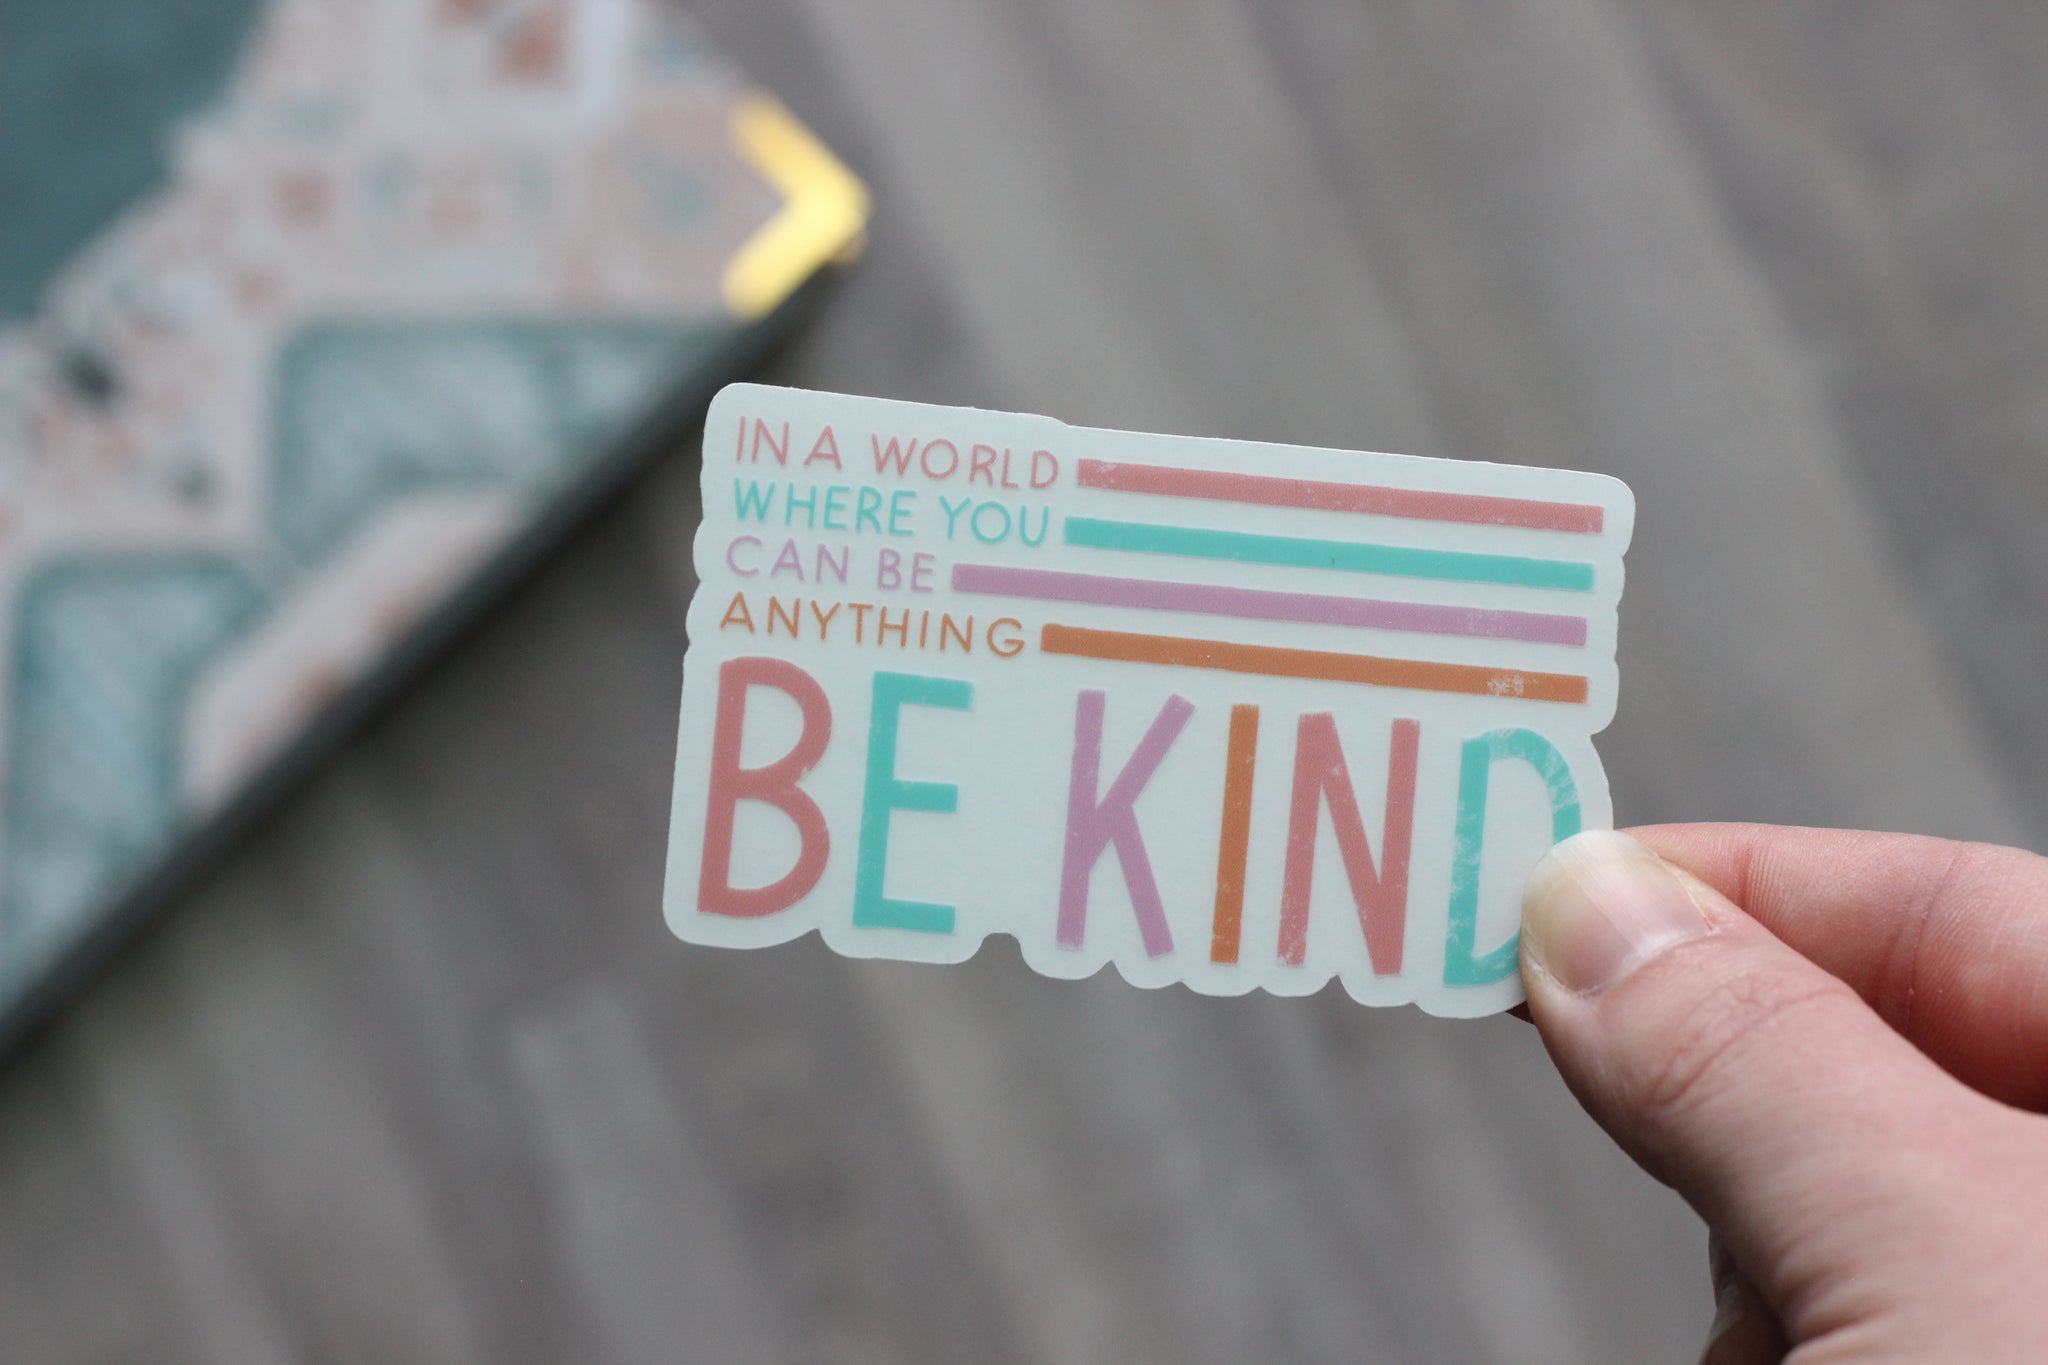 Be Kind sticker